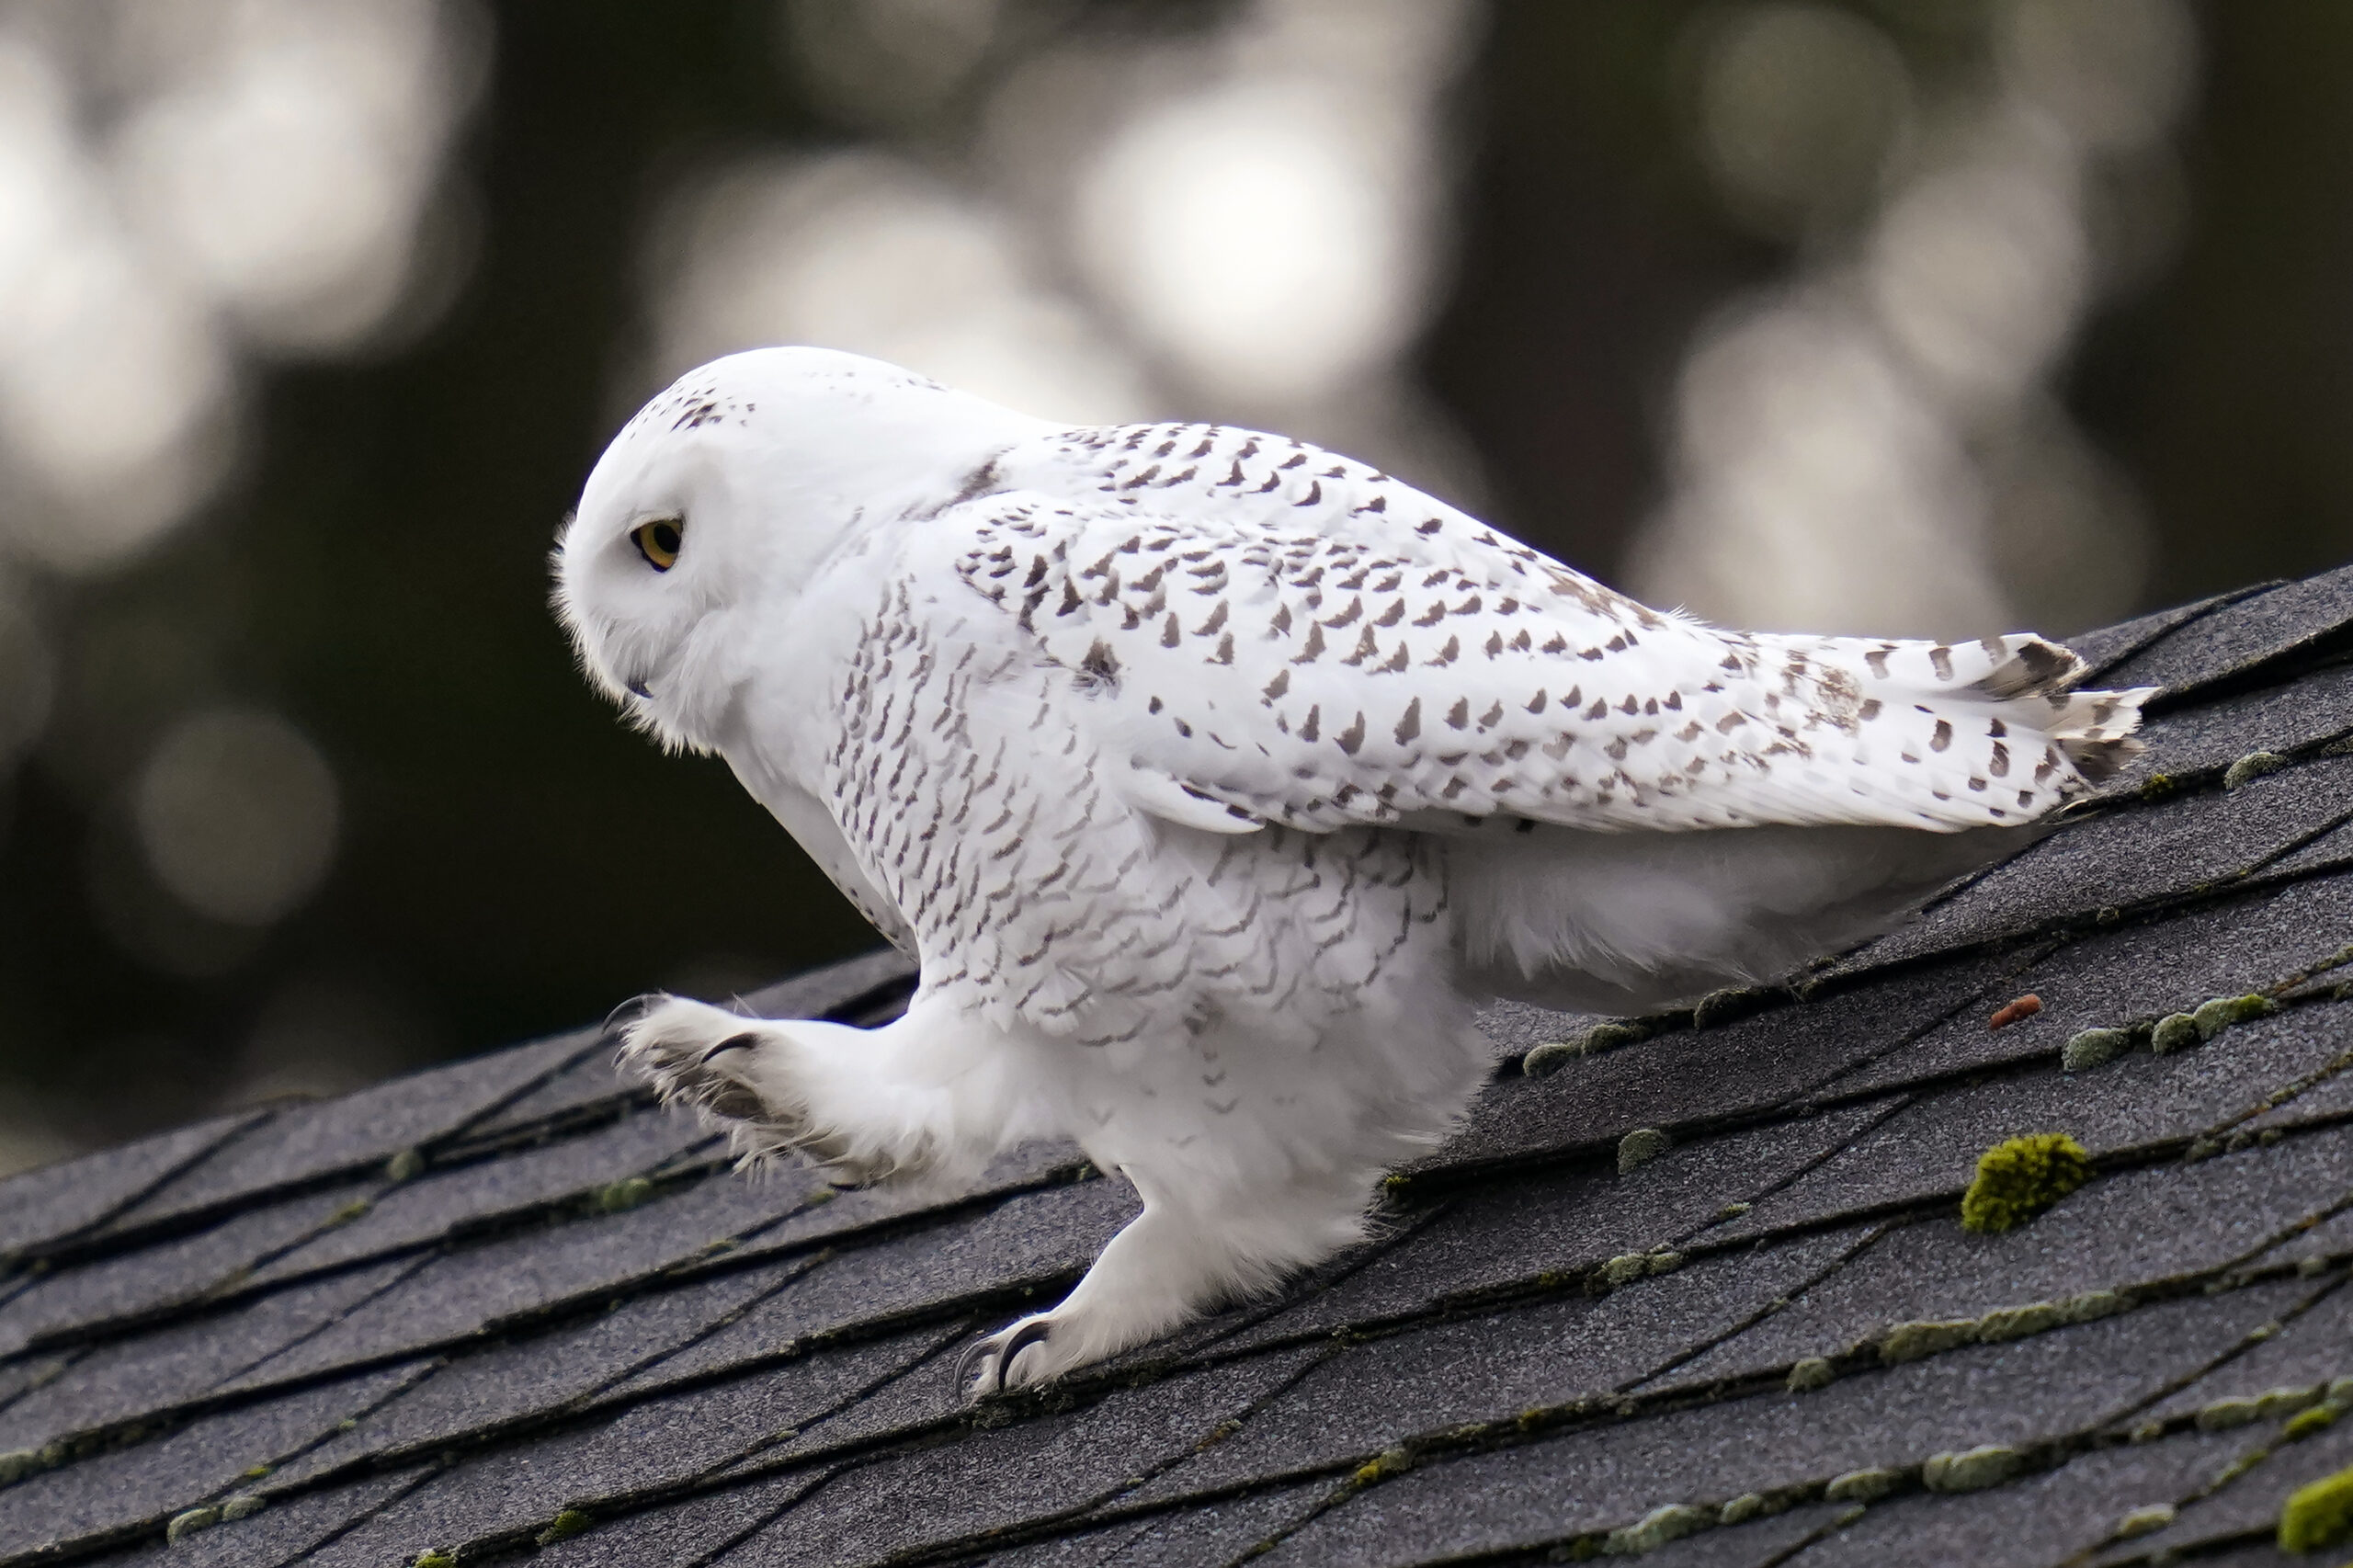 Guess hoo’s back? Despite a slow start to the season, snowy owls dazzle Wisconsin bird-watchers